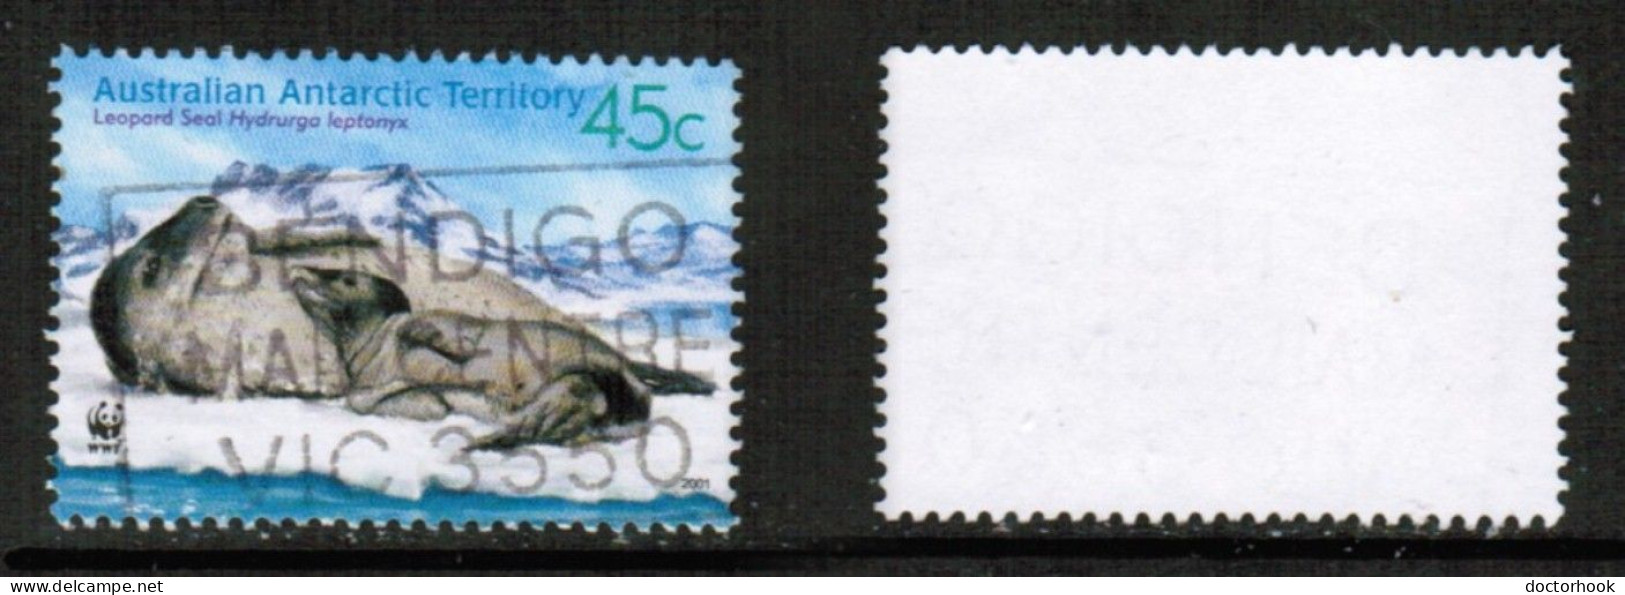 AUSTRALIAN ANTARCTIC TERRITORY   Scott # L 118a USED (CONDITION AS PER SCAN) (Stamp Scan # 930-11) - Gebruikt